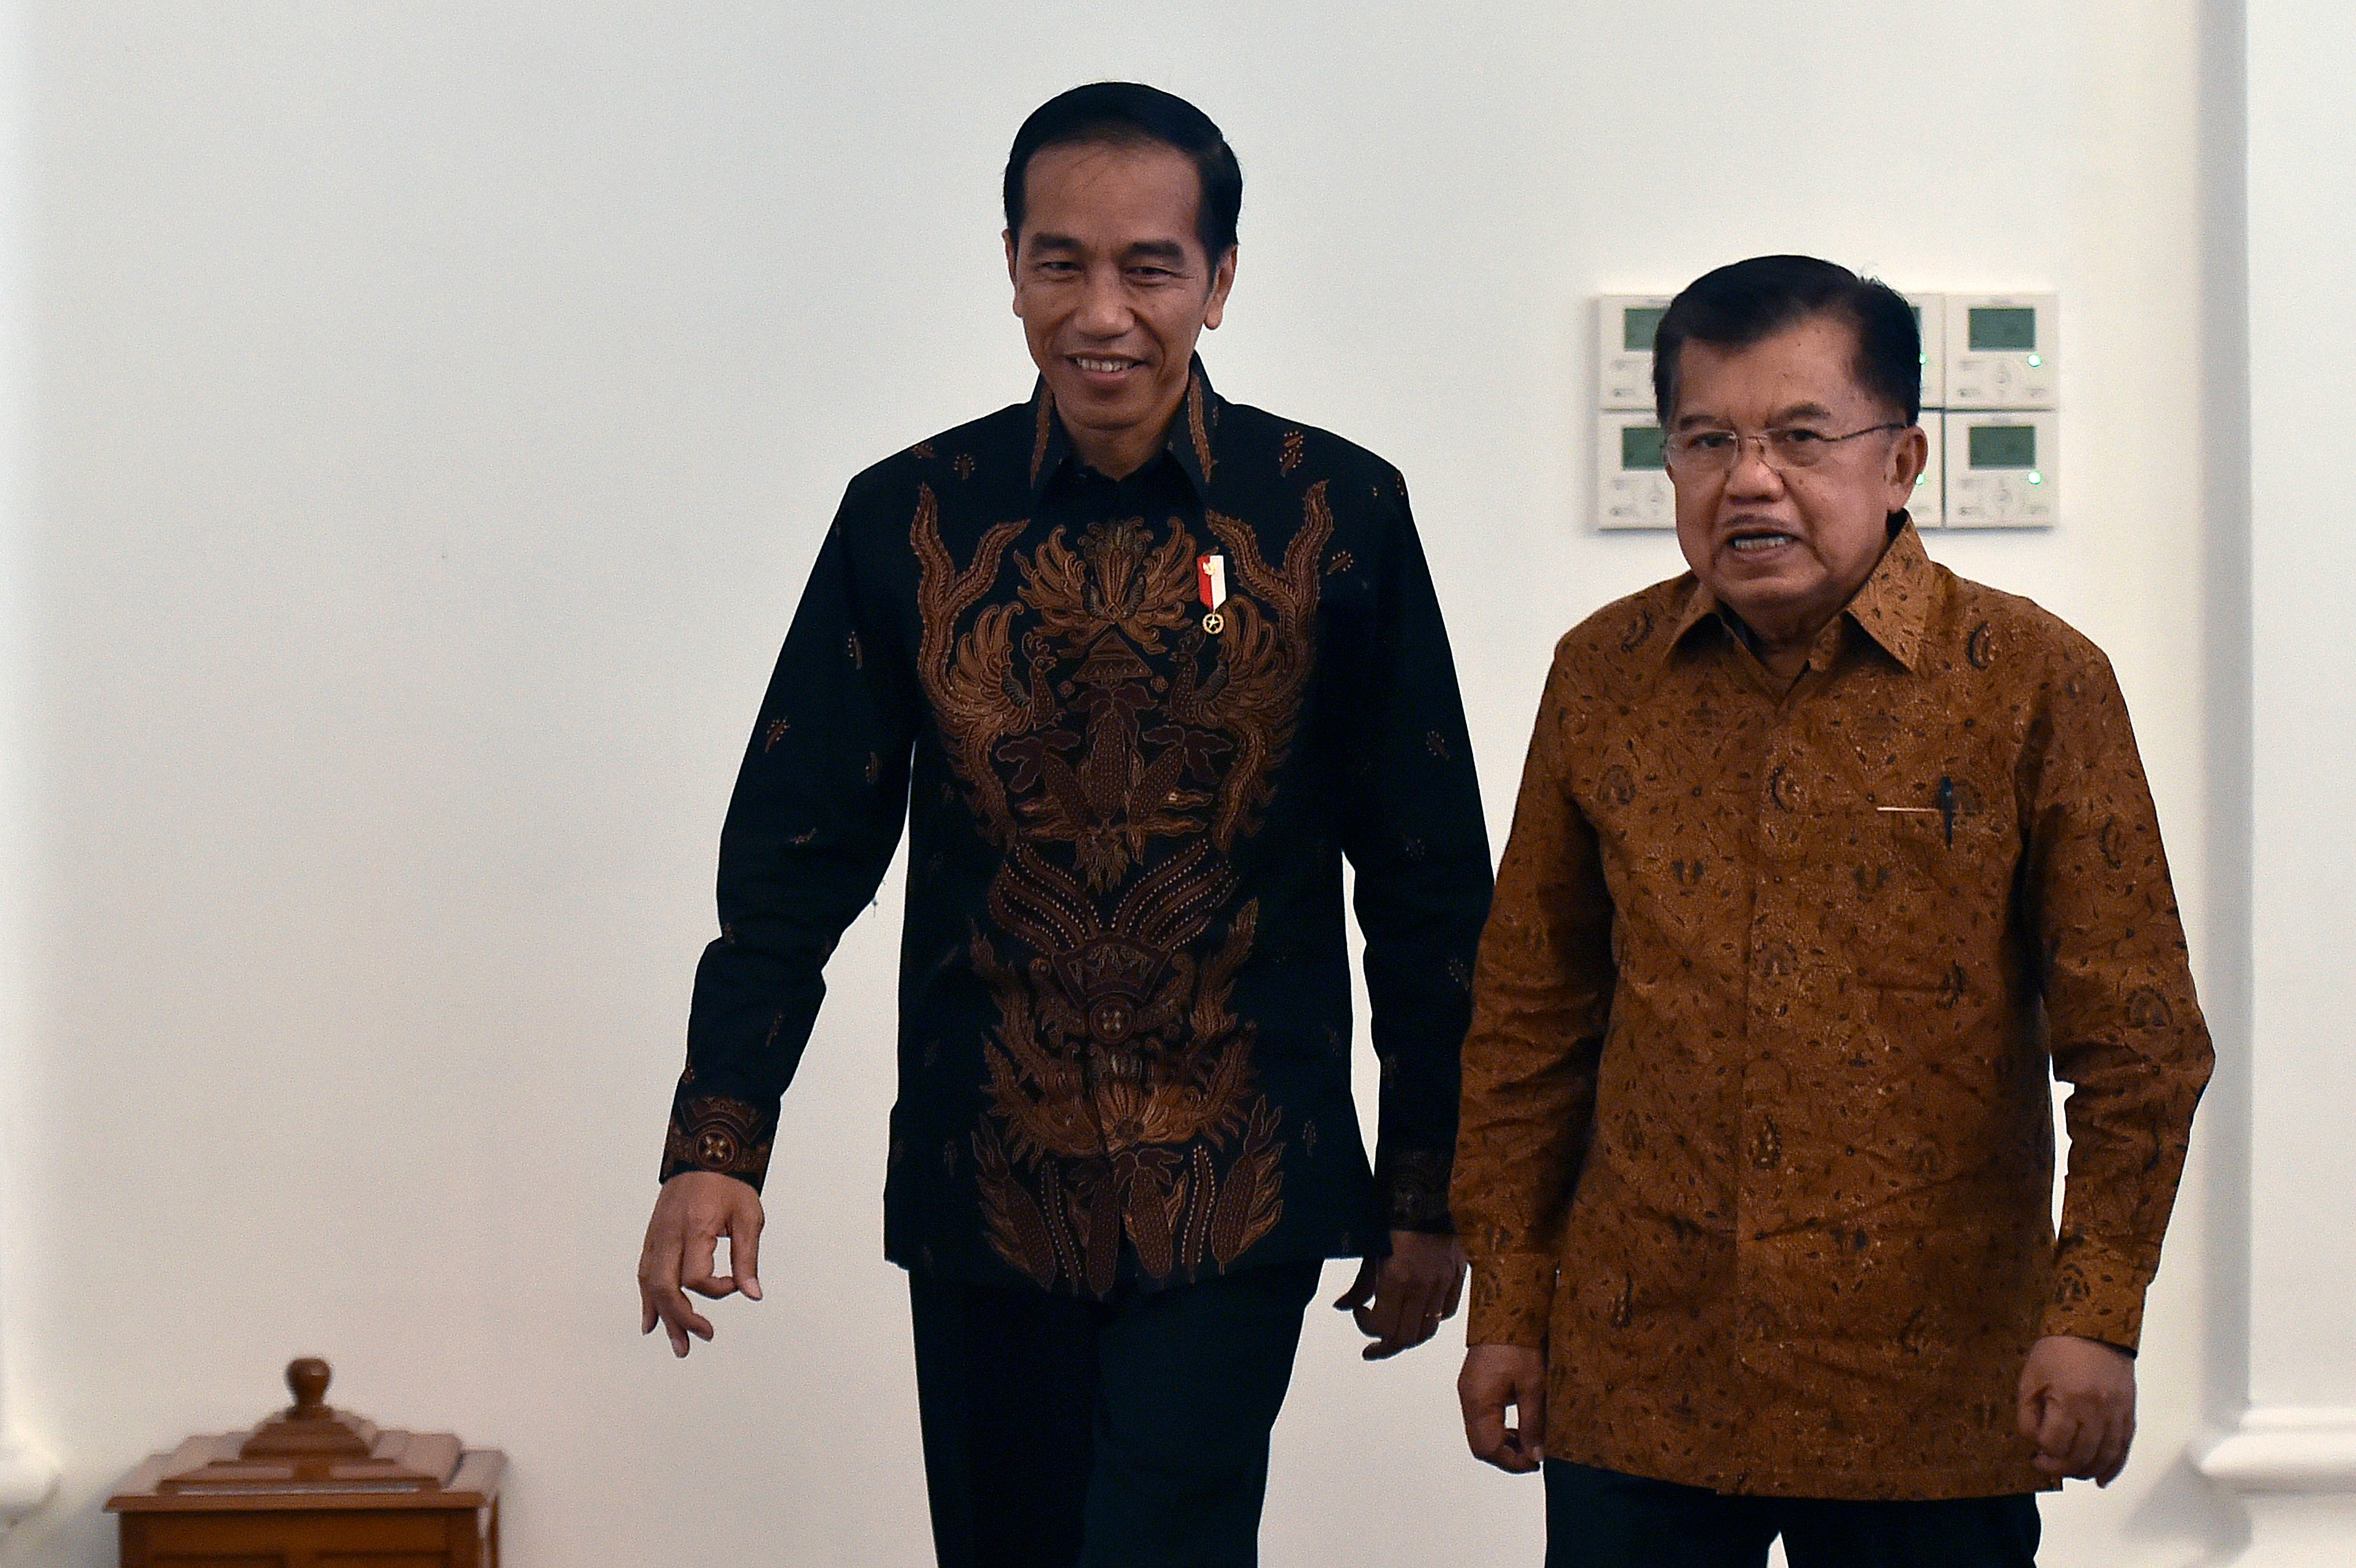 HASIL PEMERIKSAAN. Presiden Joko Widodo (kiri) didampingi Wakil Presiden Jusuf Kalla (kanan) meninggalkan Ruang Garuda seusai menghadiri Penyampaian Laporan Hasil Pemeriksaan atas Laporan Keuangan Pemerintah Pusat (LKPP) tahun 2016 di Istana Bogor, Bogor, Jawa Barat, Selasa, 23 Mei. Foto oleh Puspa Perwitasari/ANTARA 